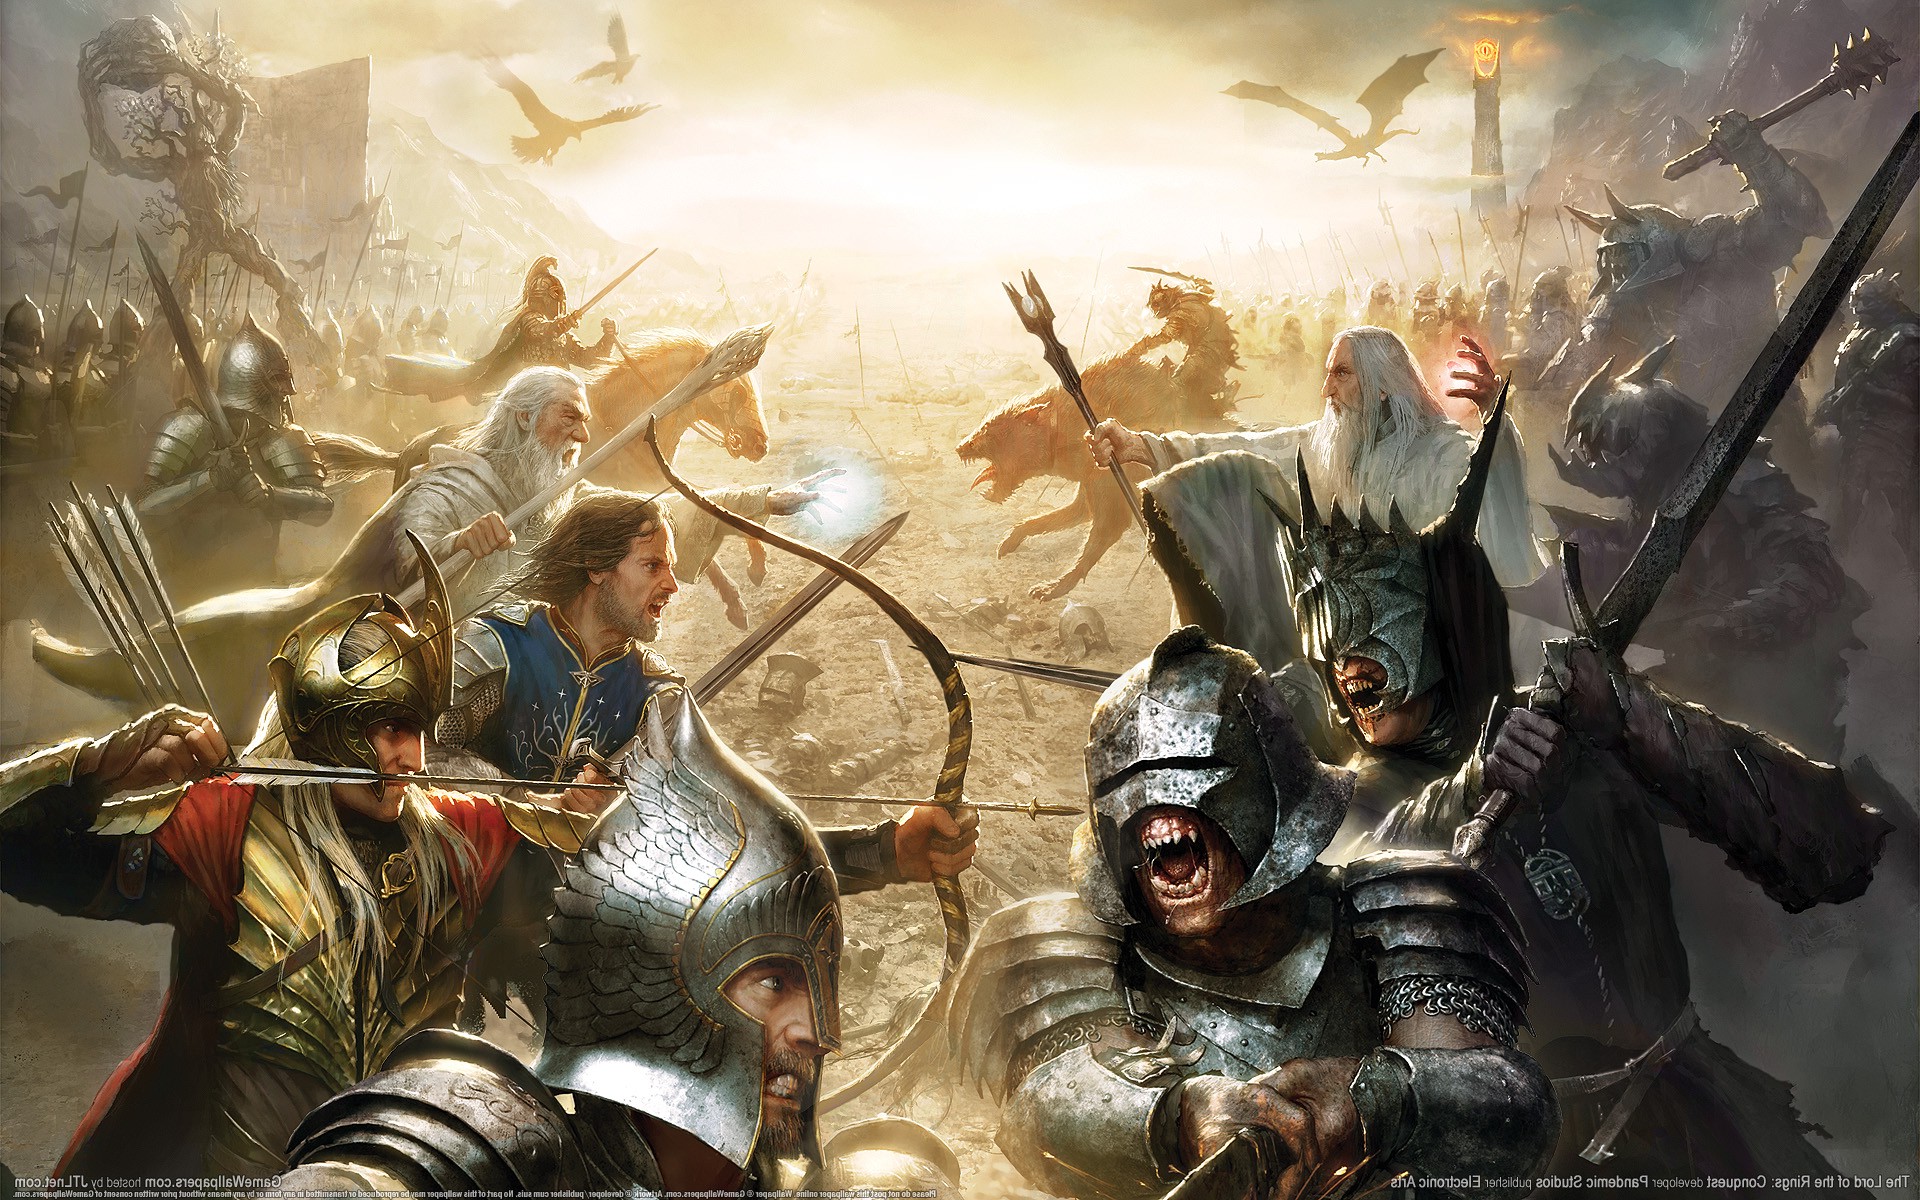 The Lord Of The Rings, Video Games, Saruman, Aragorn, Gondor, Ents, War, Sauron, Orcs, Trolls, Movies Wallpaper